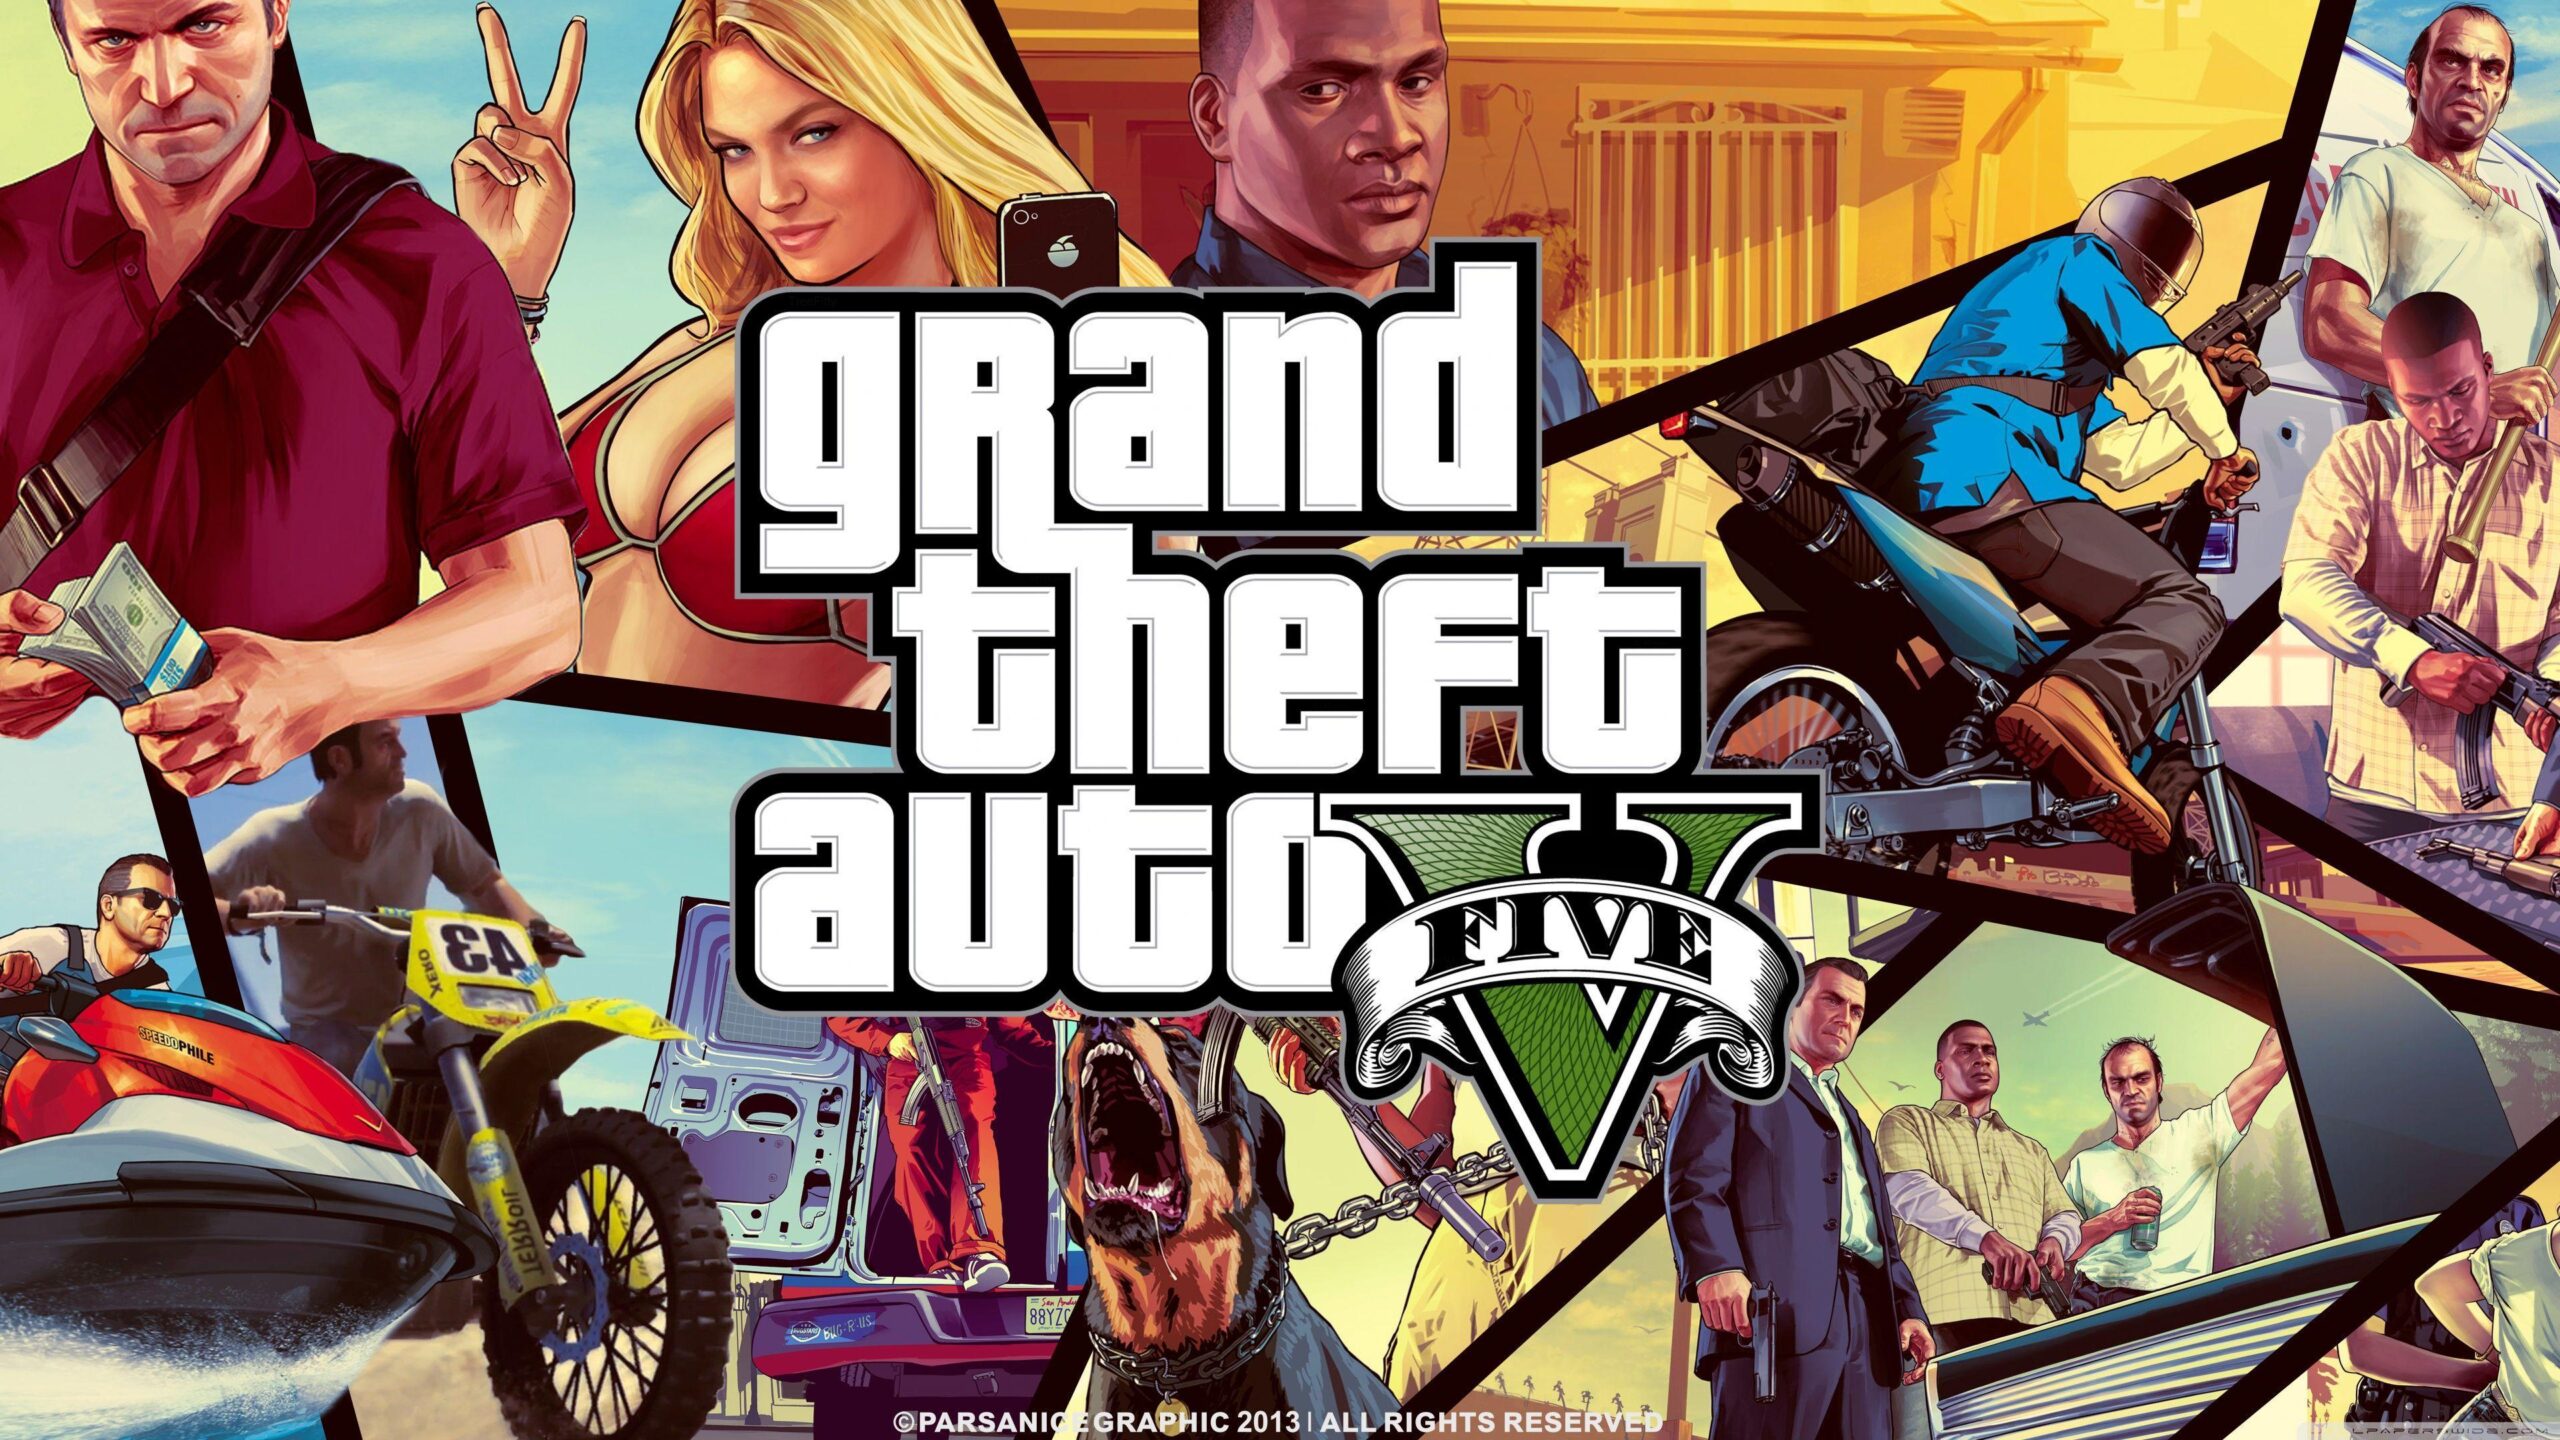 Grand Theft Auto V 4k Wallpapers, Grand Theft Auto V, Game